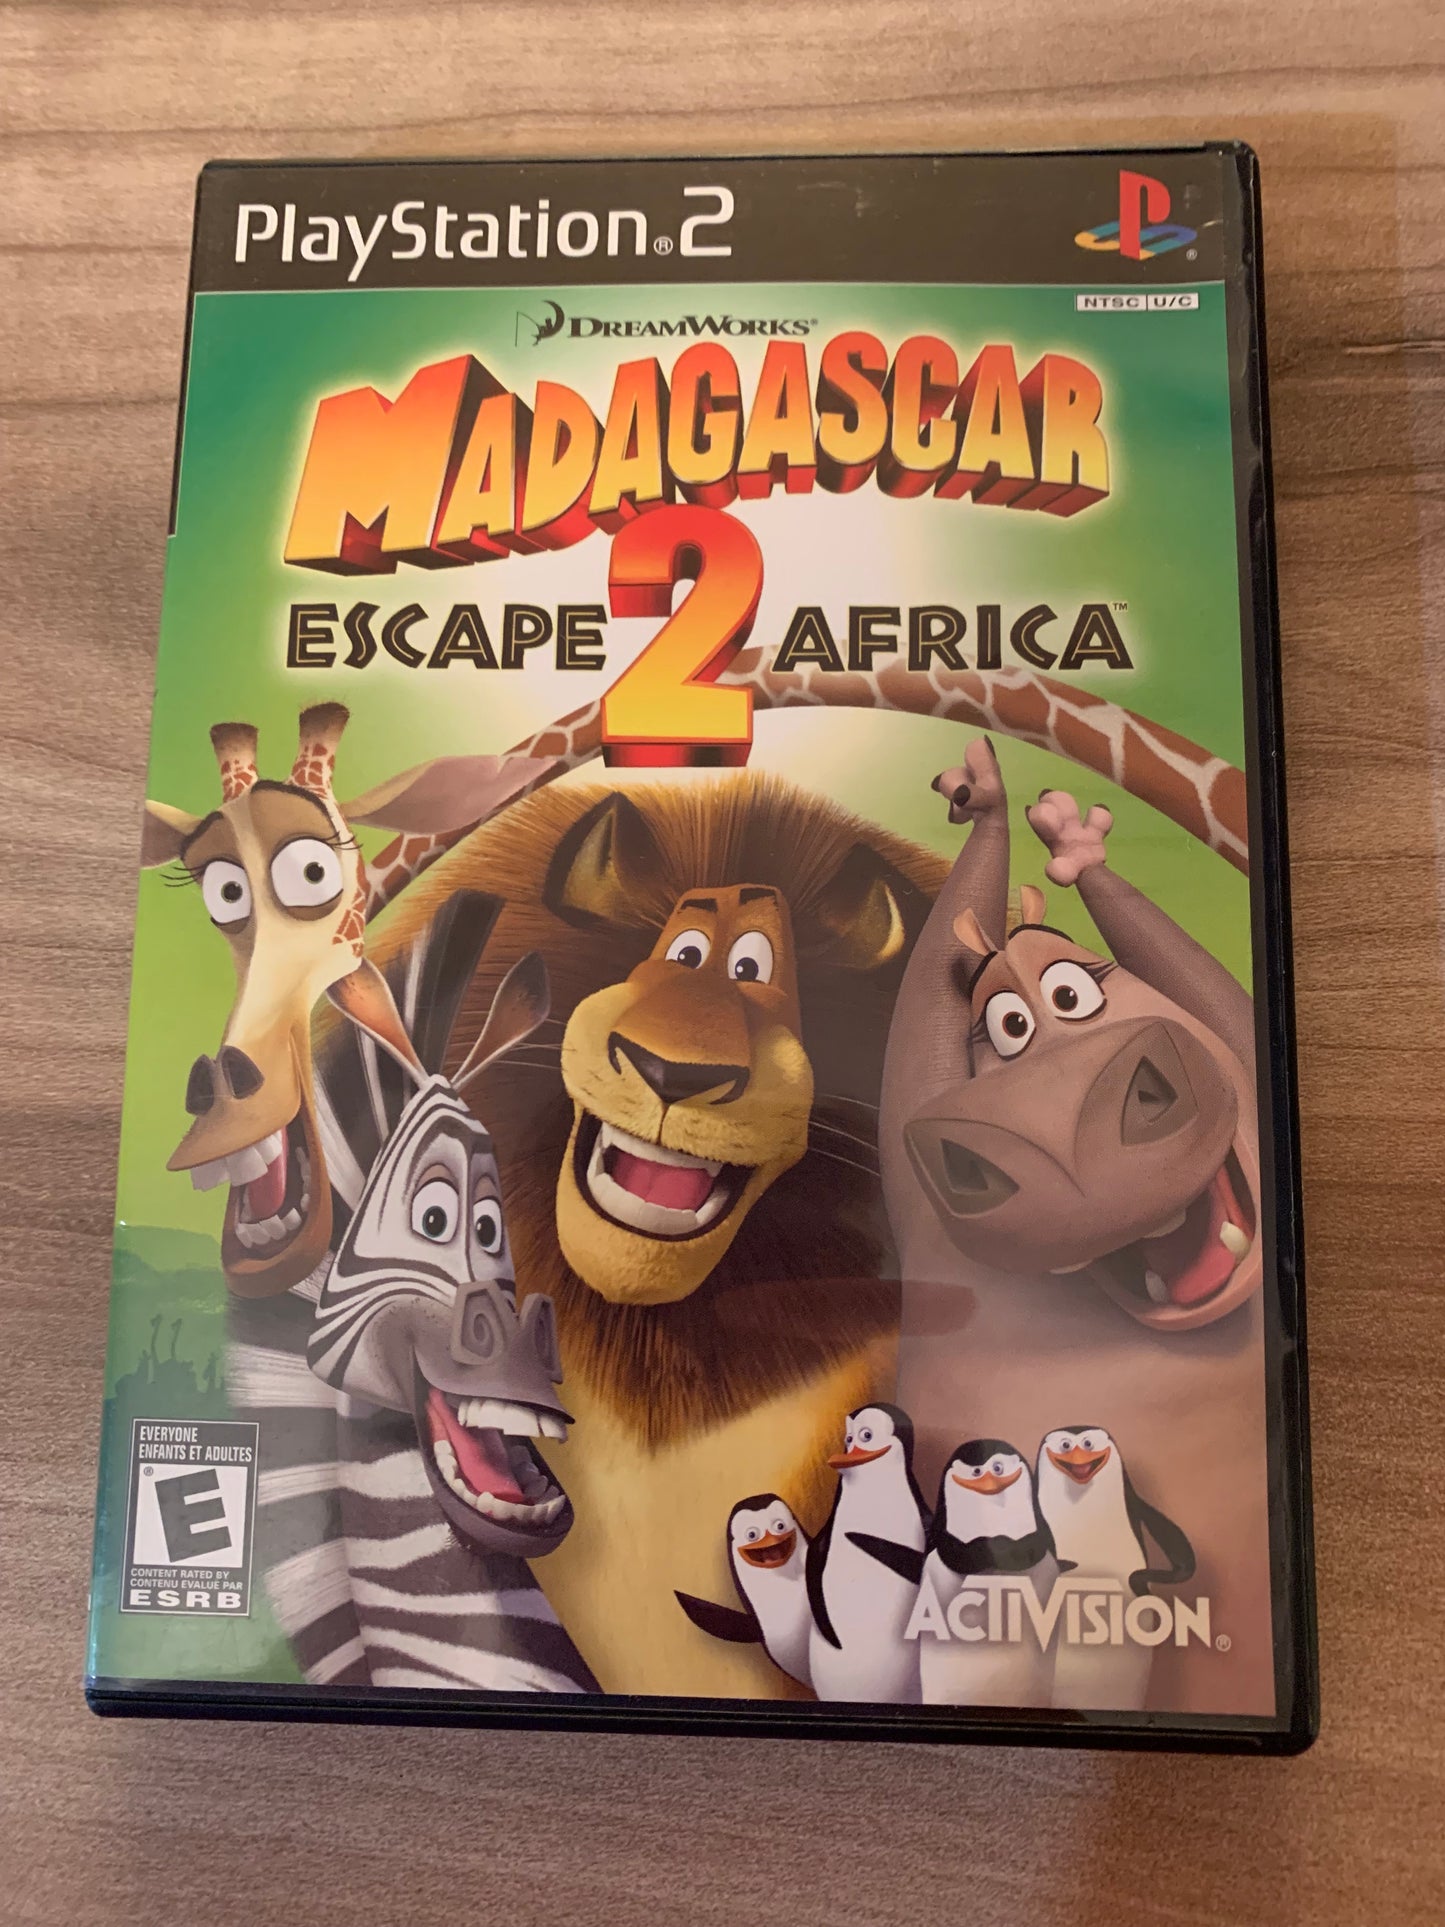 SONY PLAYSTATiON 2 [PS2] | MADAGASCAR ESCAPE 2 AFRiCA